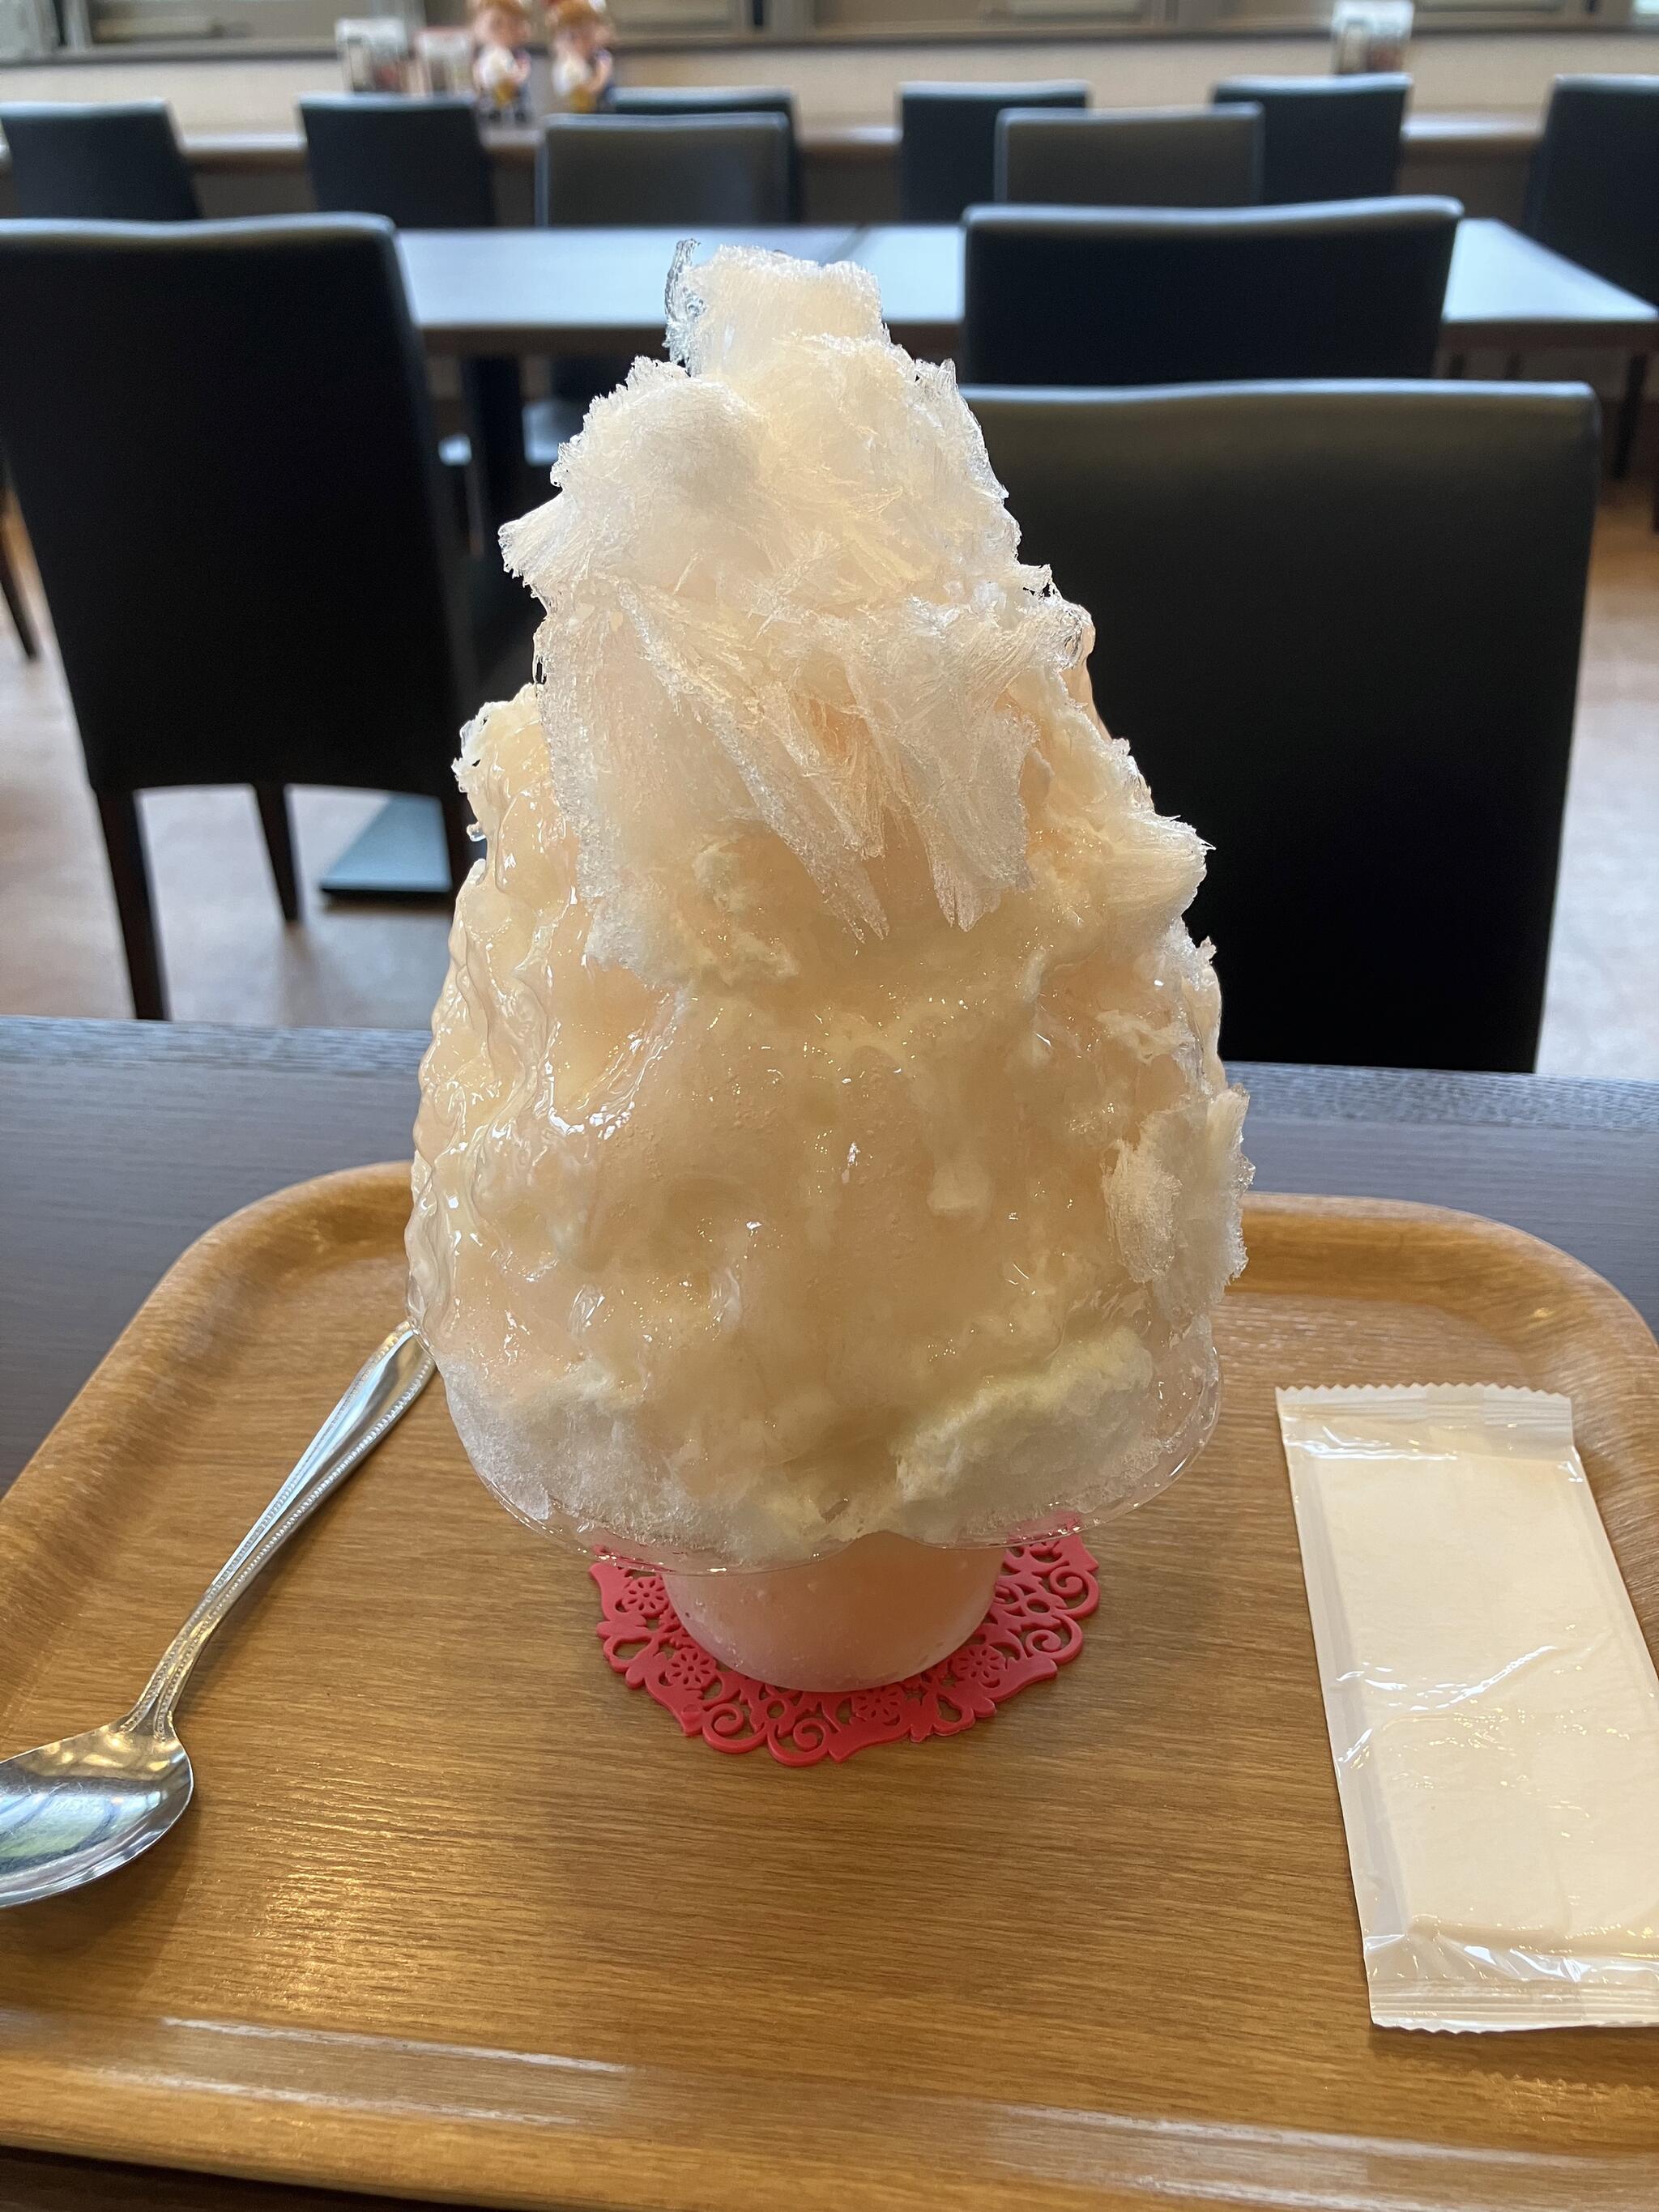 Ice cafe’ 弘水 -KOSUI-の代表写真5